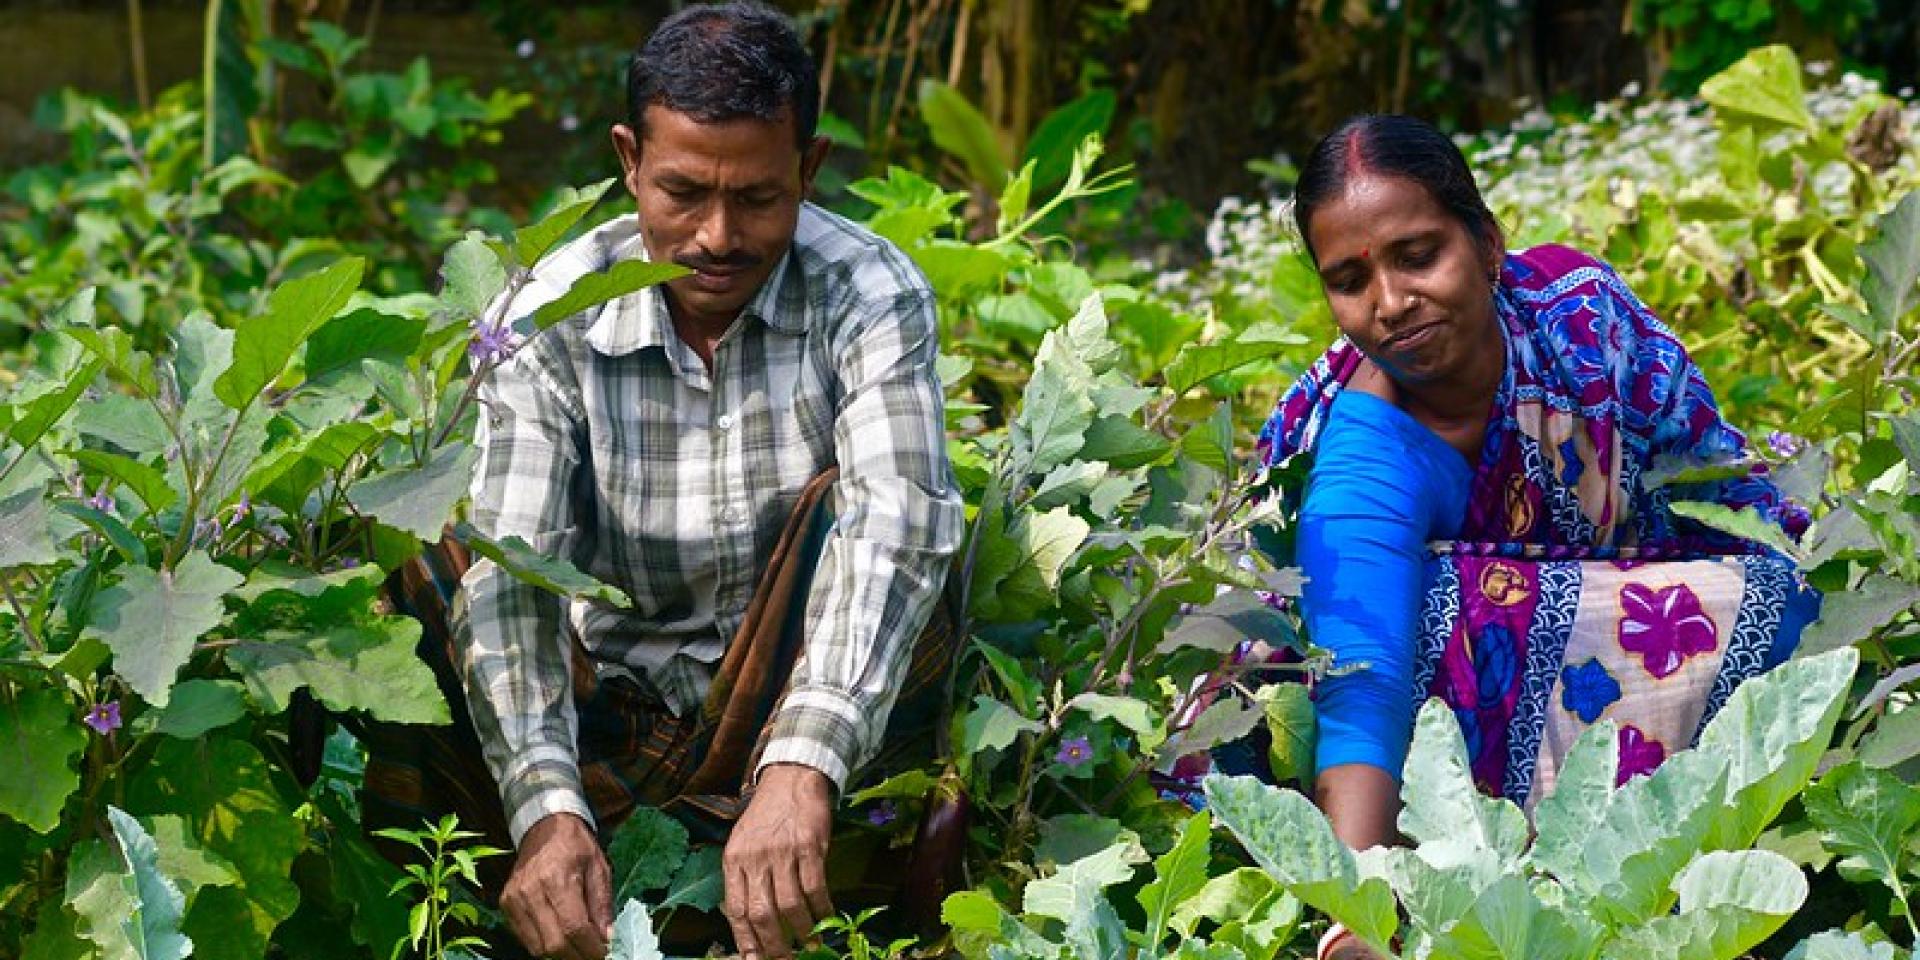 Vegetable gardening, Bangladesh. Mohammad Mahabubur Rahman, 2016.